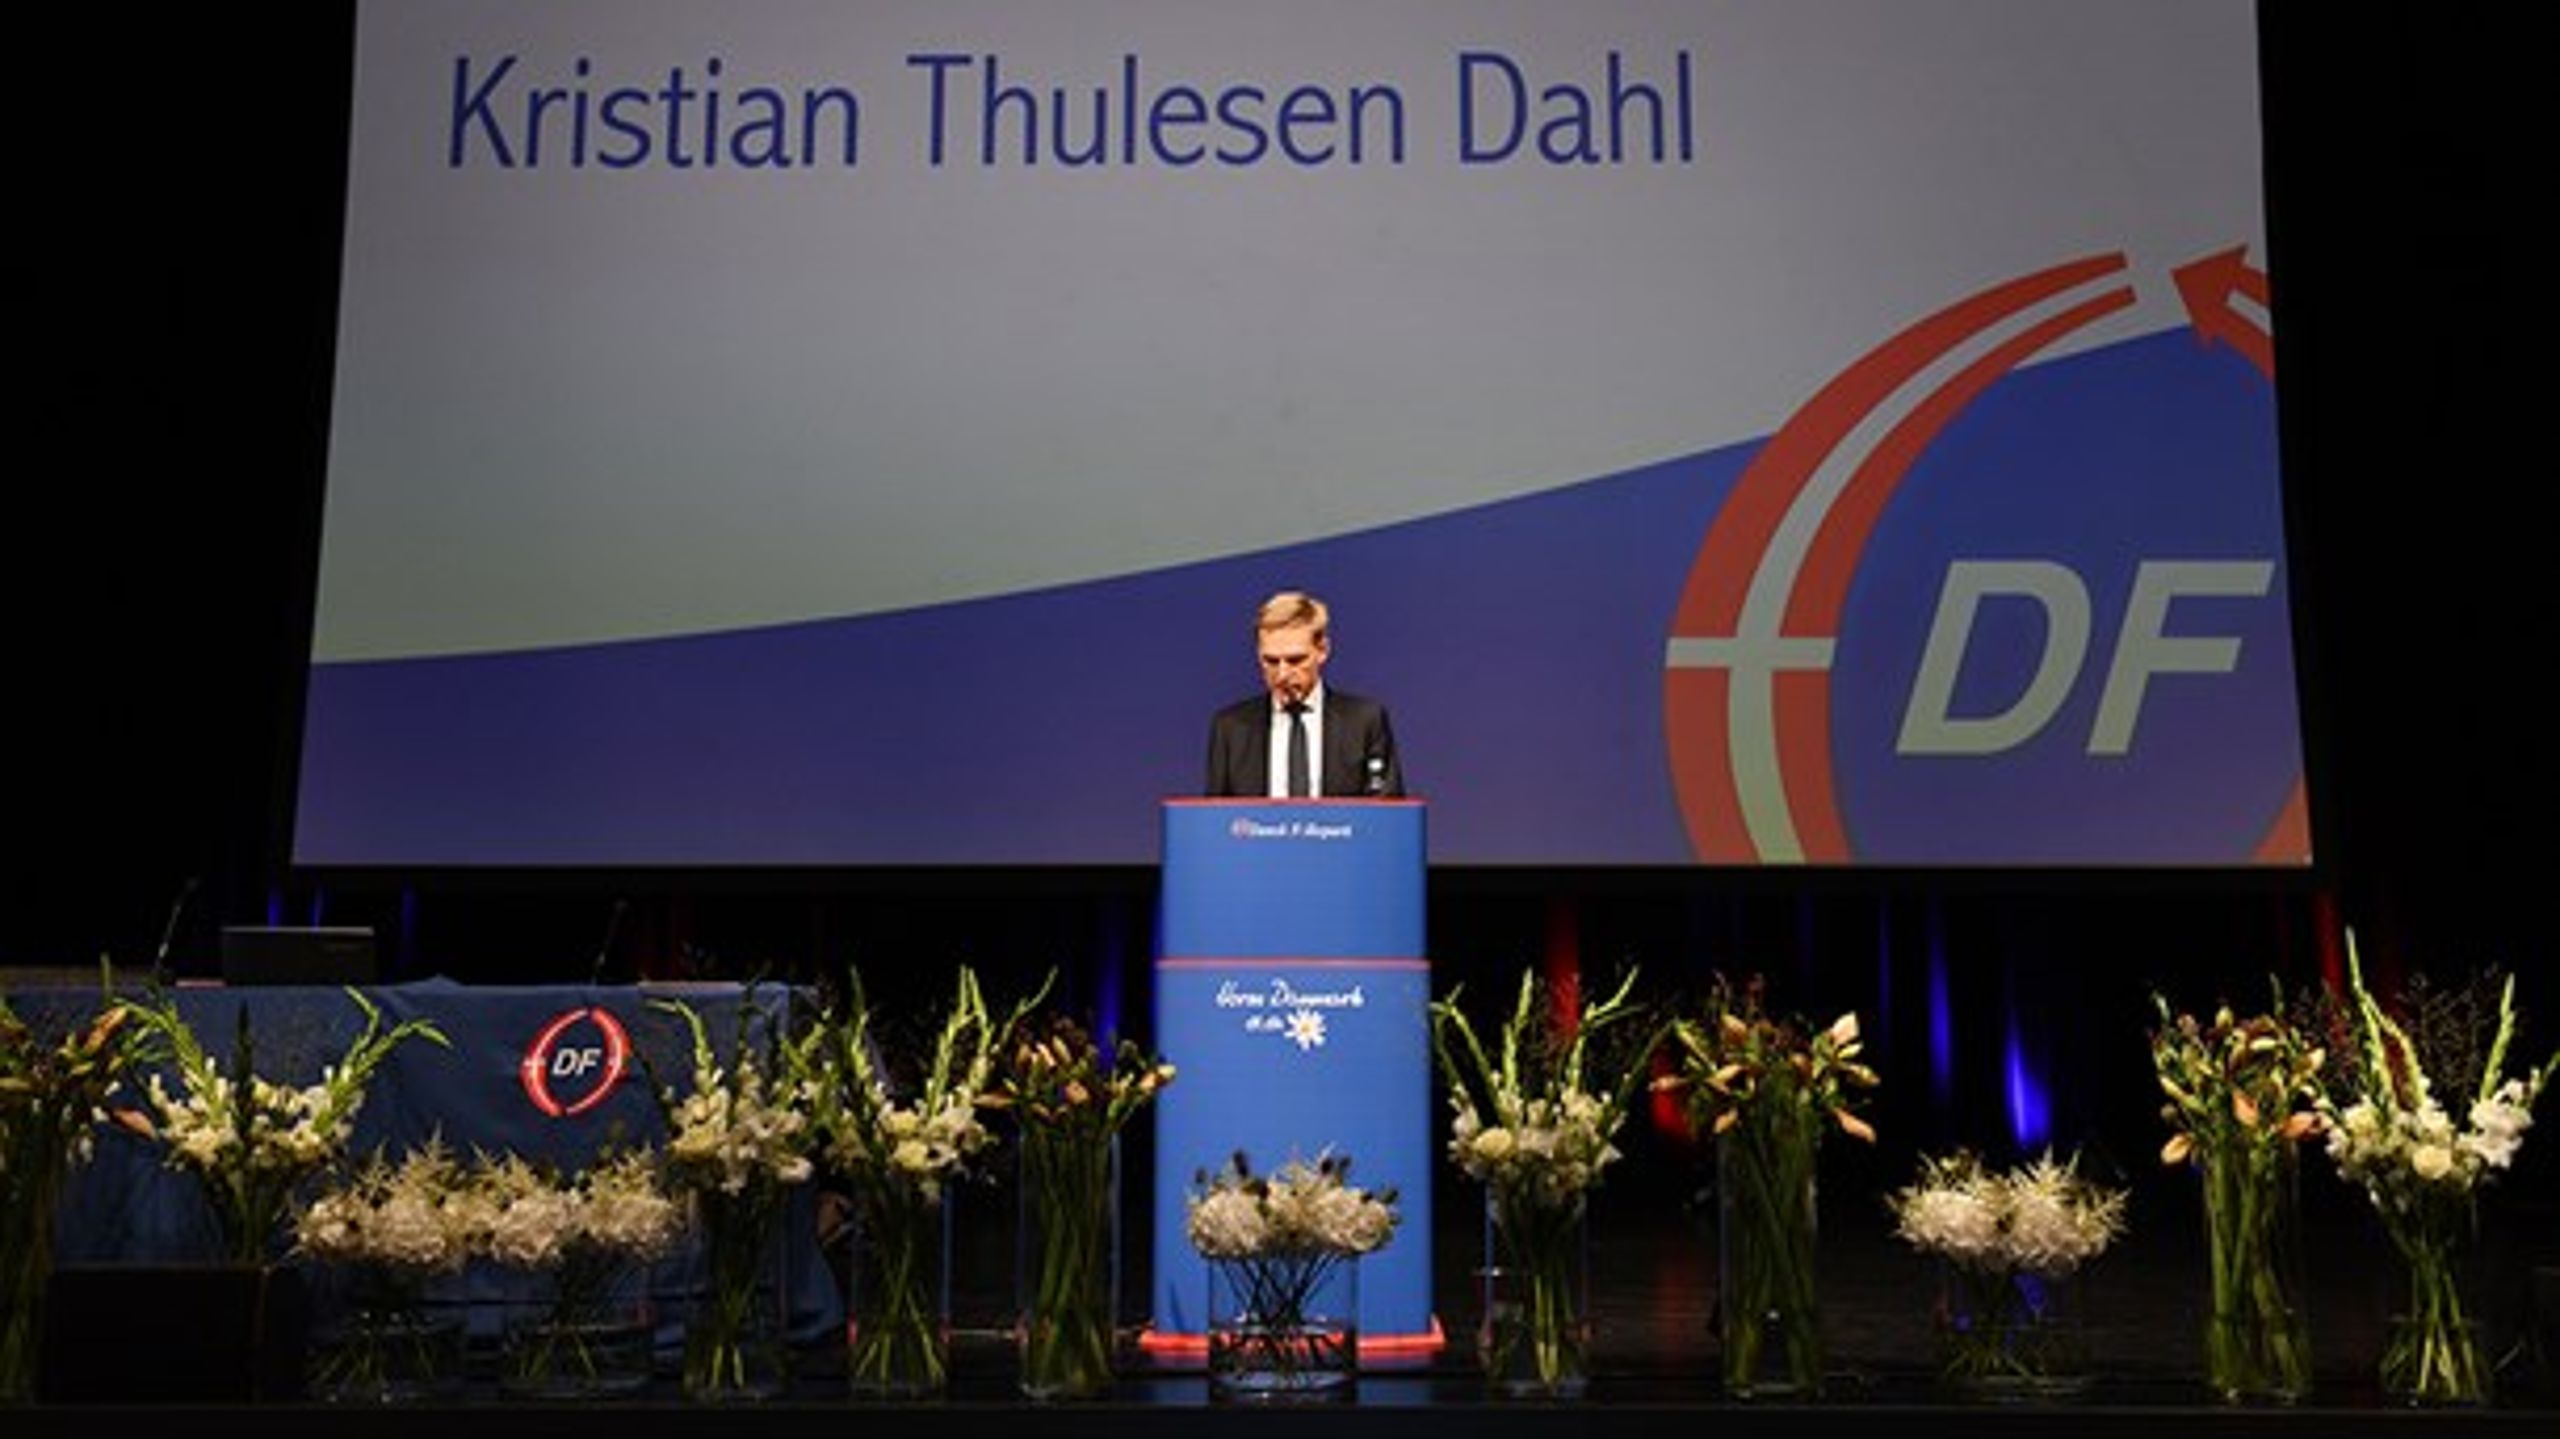 Kristian Thulesen Dahl erklærede fra sin talerstol, at Dansk Folkeparti er landets kedeligste parti. Det var ment som et kompliment.